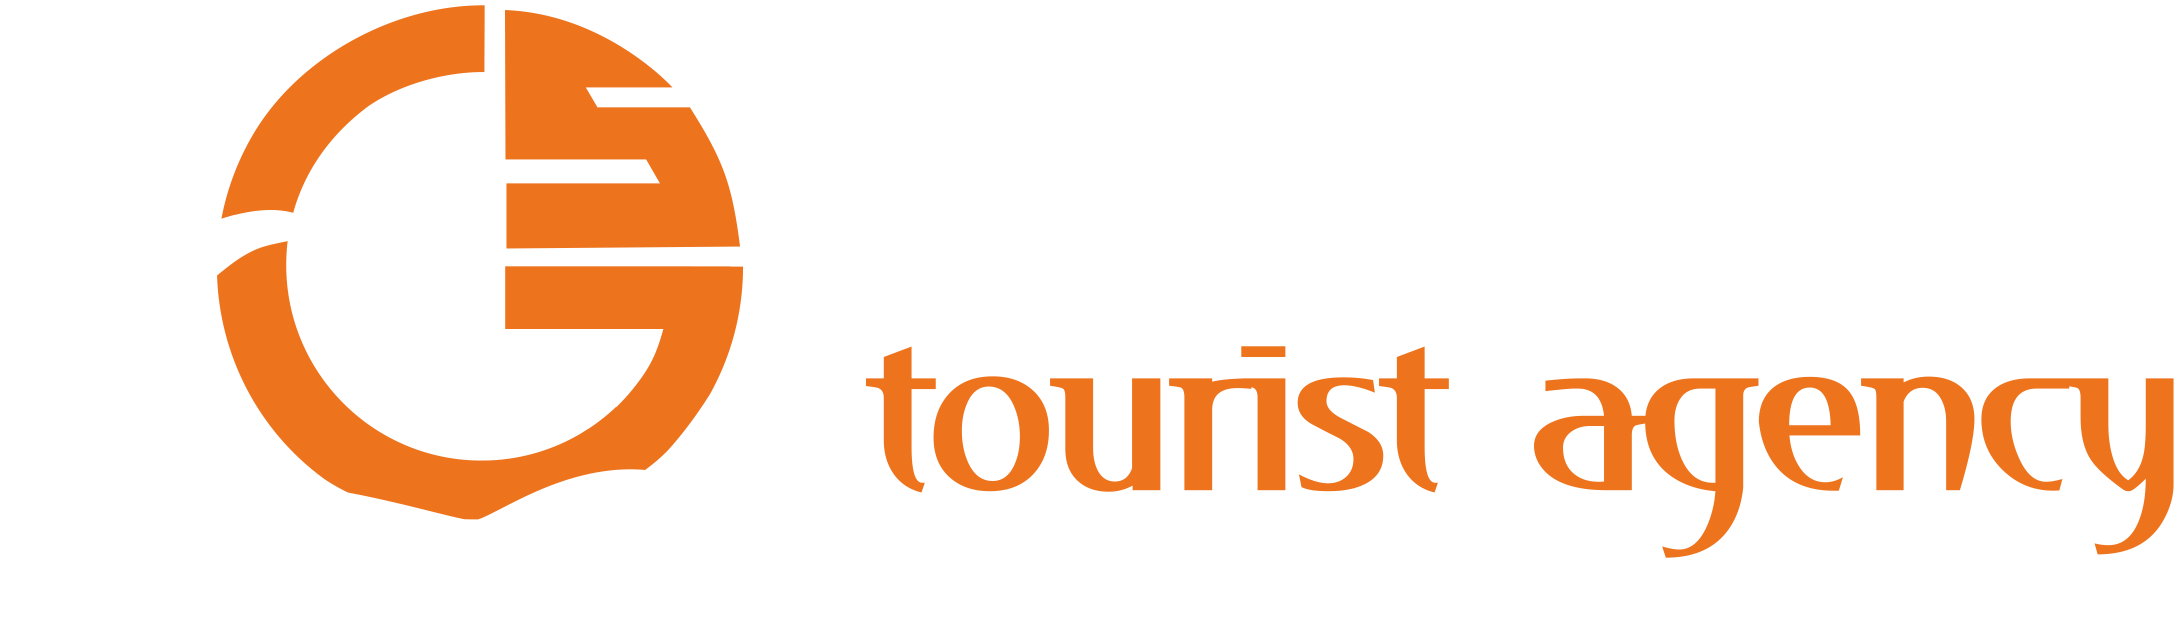 Moraitika Tourist Agency